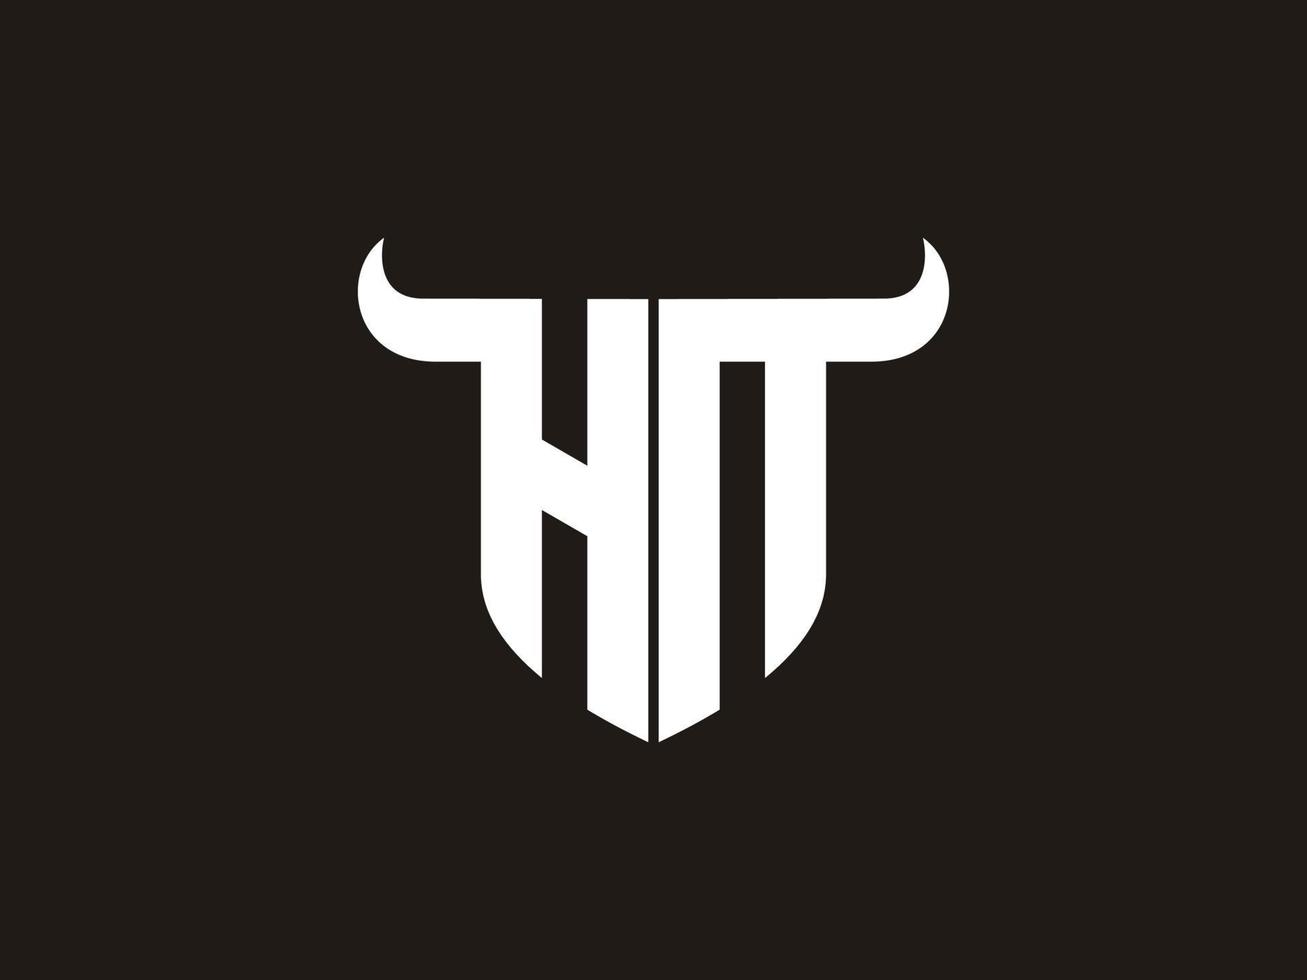 design inicial do logotipo do touro hn. vetor